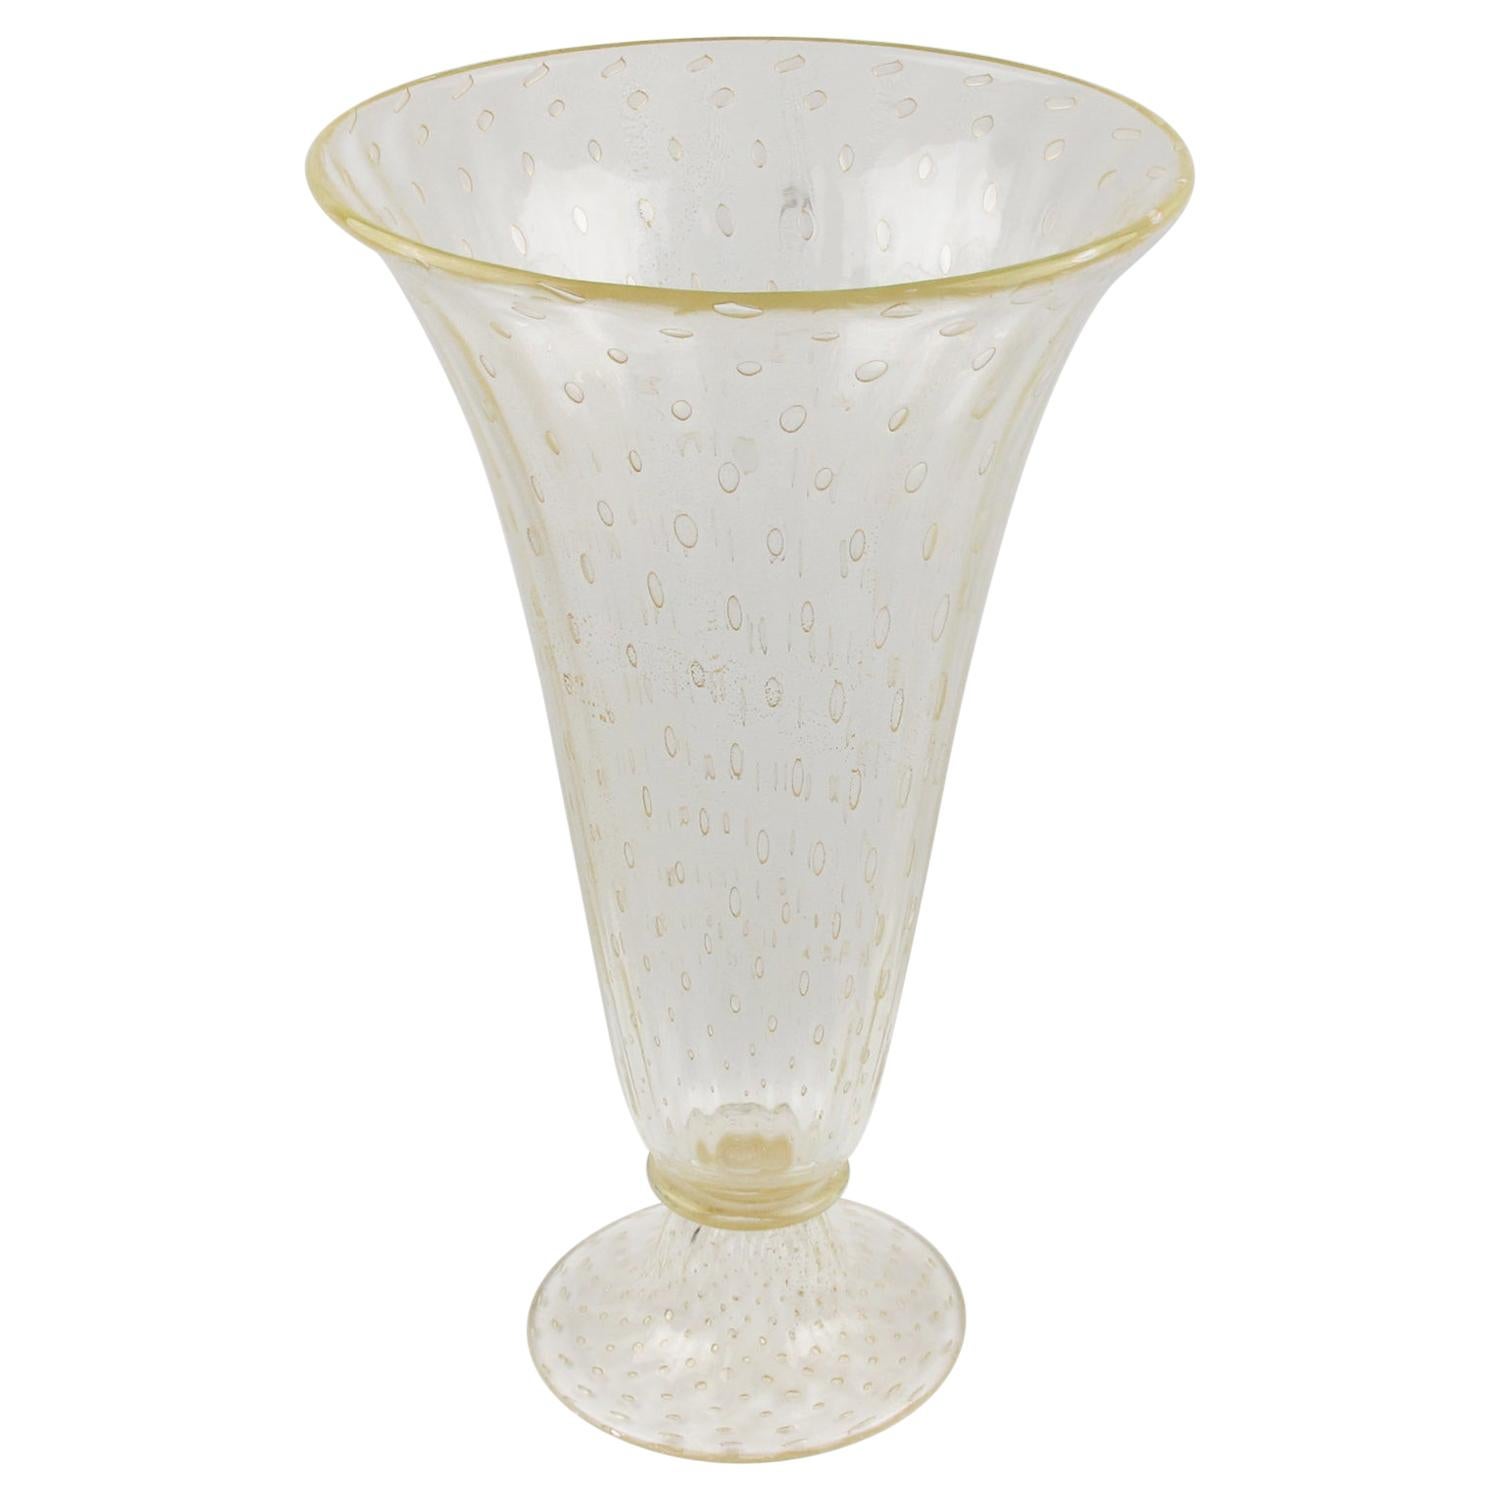 Italian Art Glass Murano Avventurina Sculptural Vase Gold Flakes and Bubbles